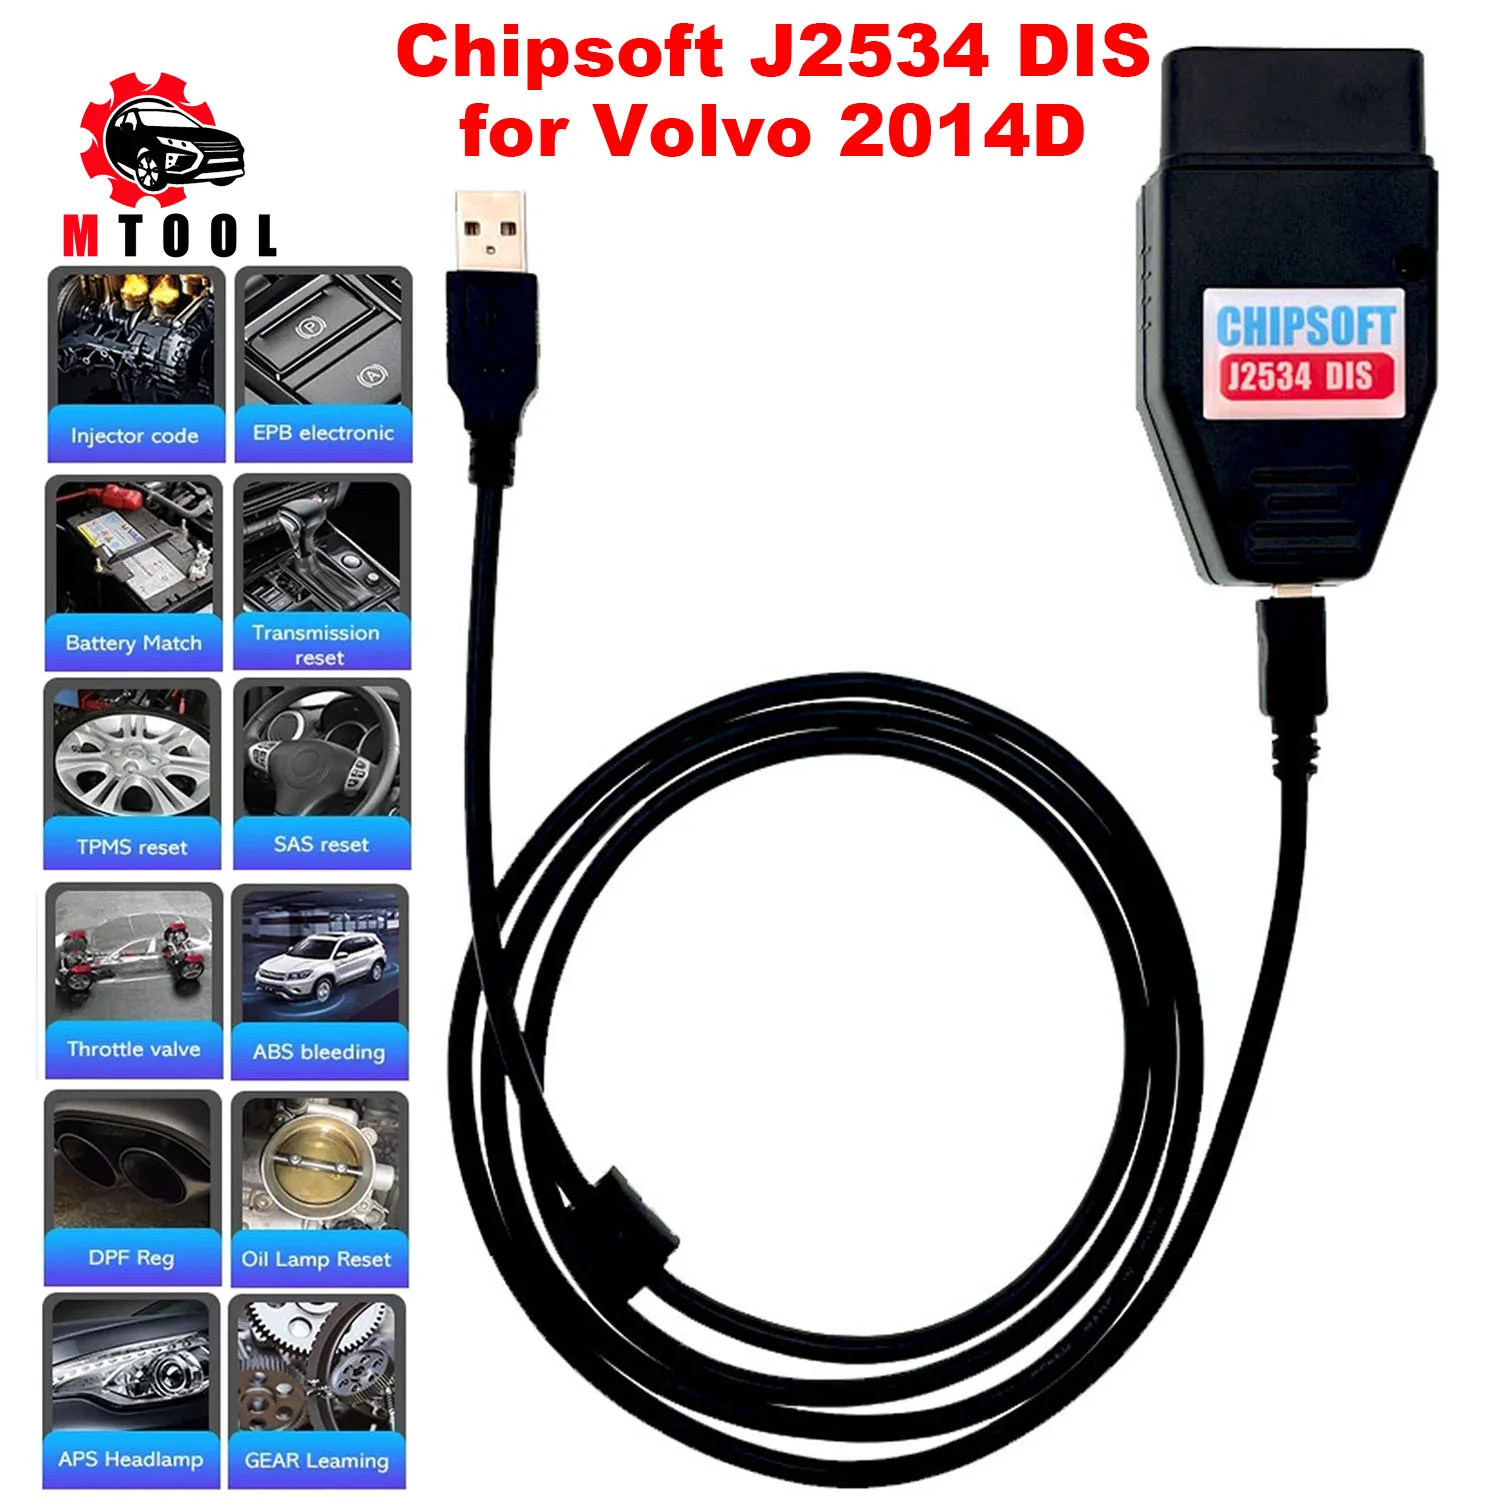 Chipsoft J2534 DIS KLine CAN BUS Adapter for Volvo 2014D Dice Full System Car Diagnostic tools USB OBD2 Scanner Active Test